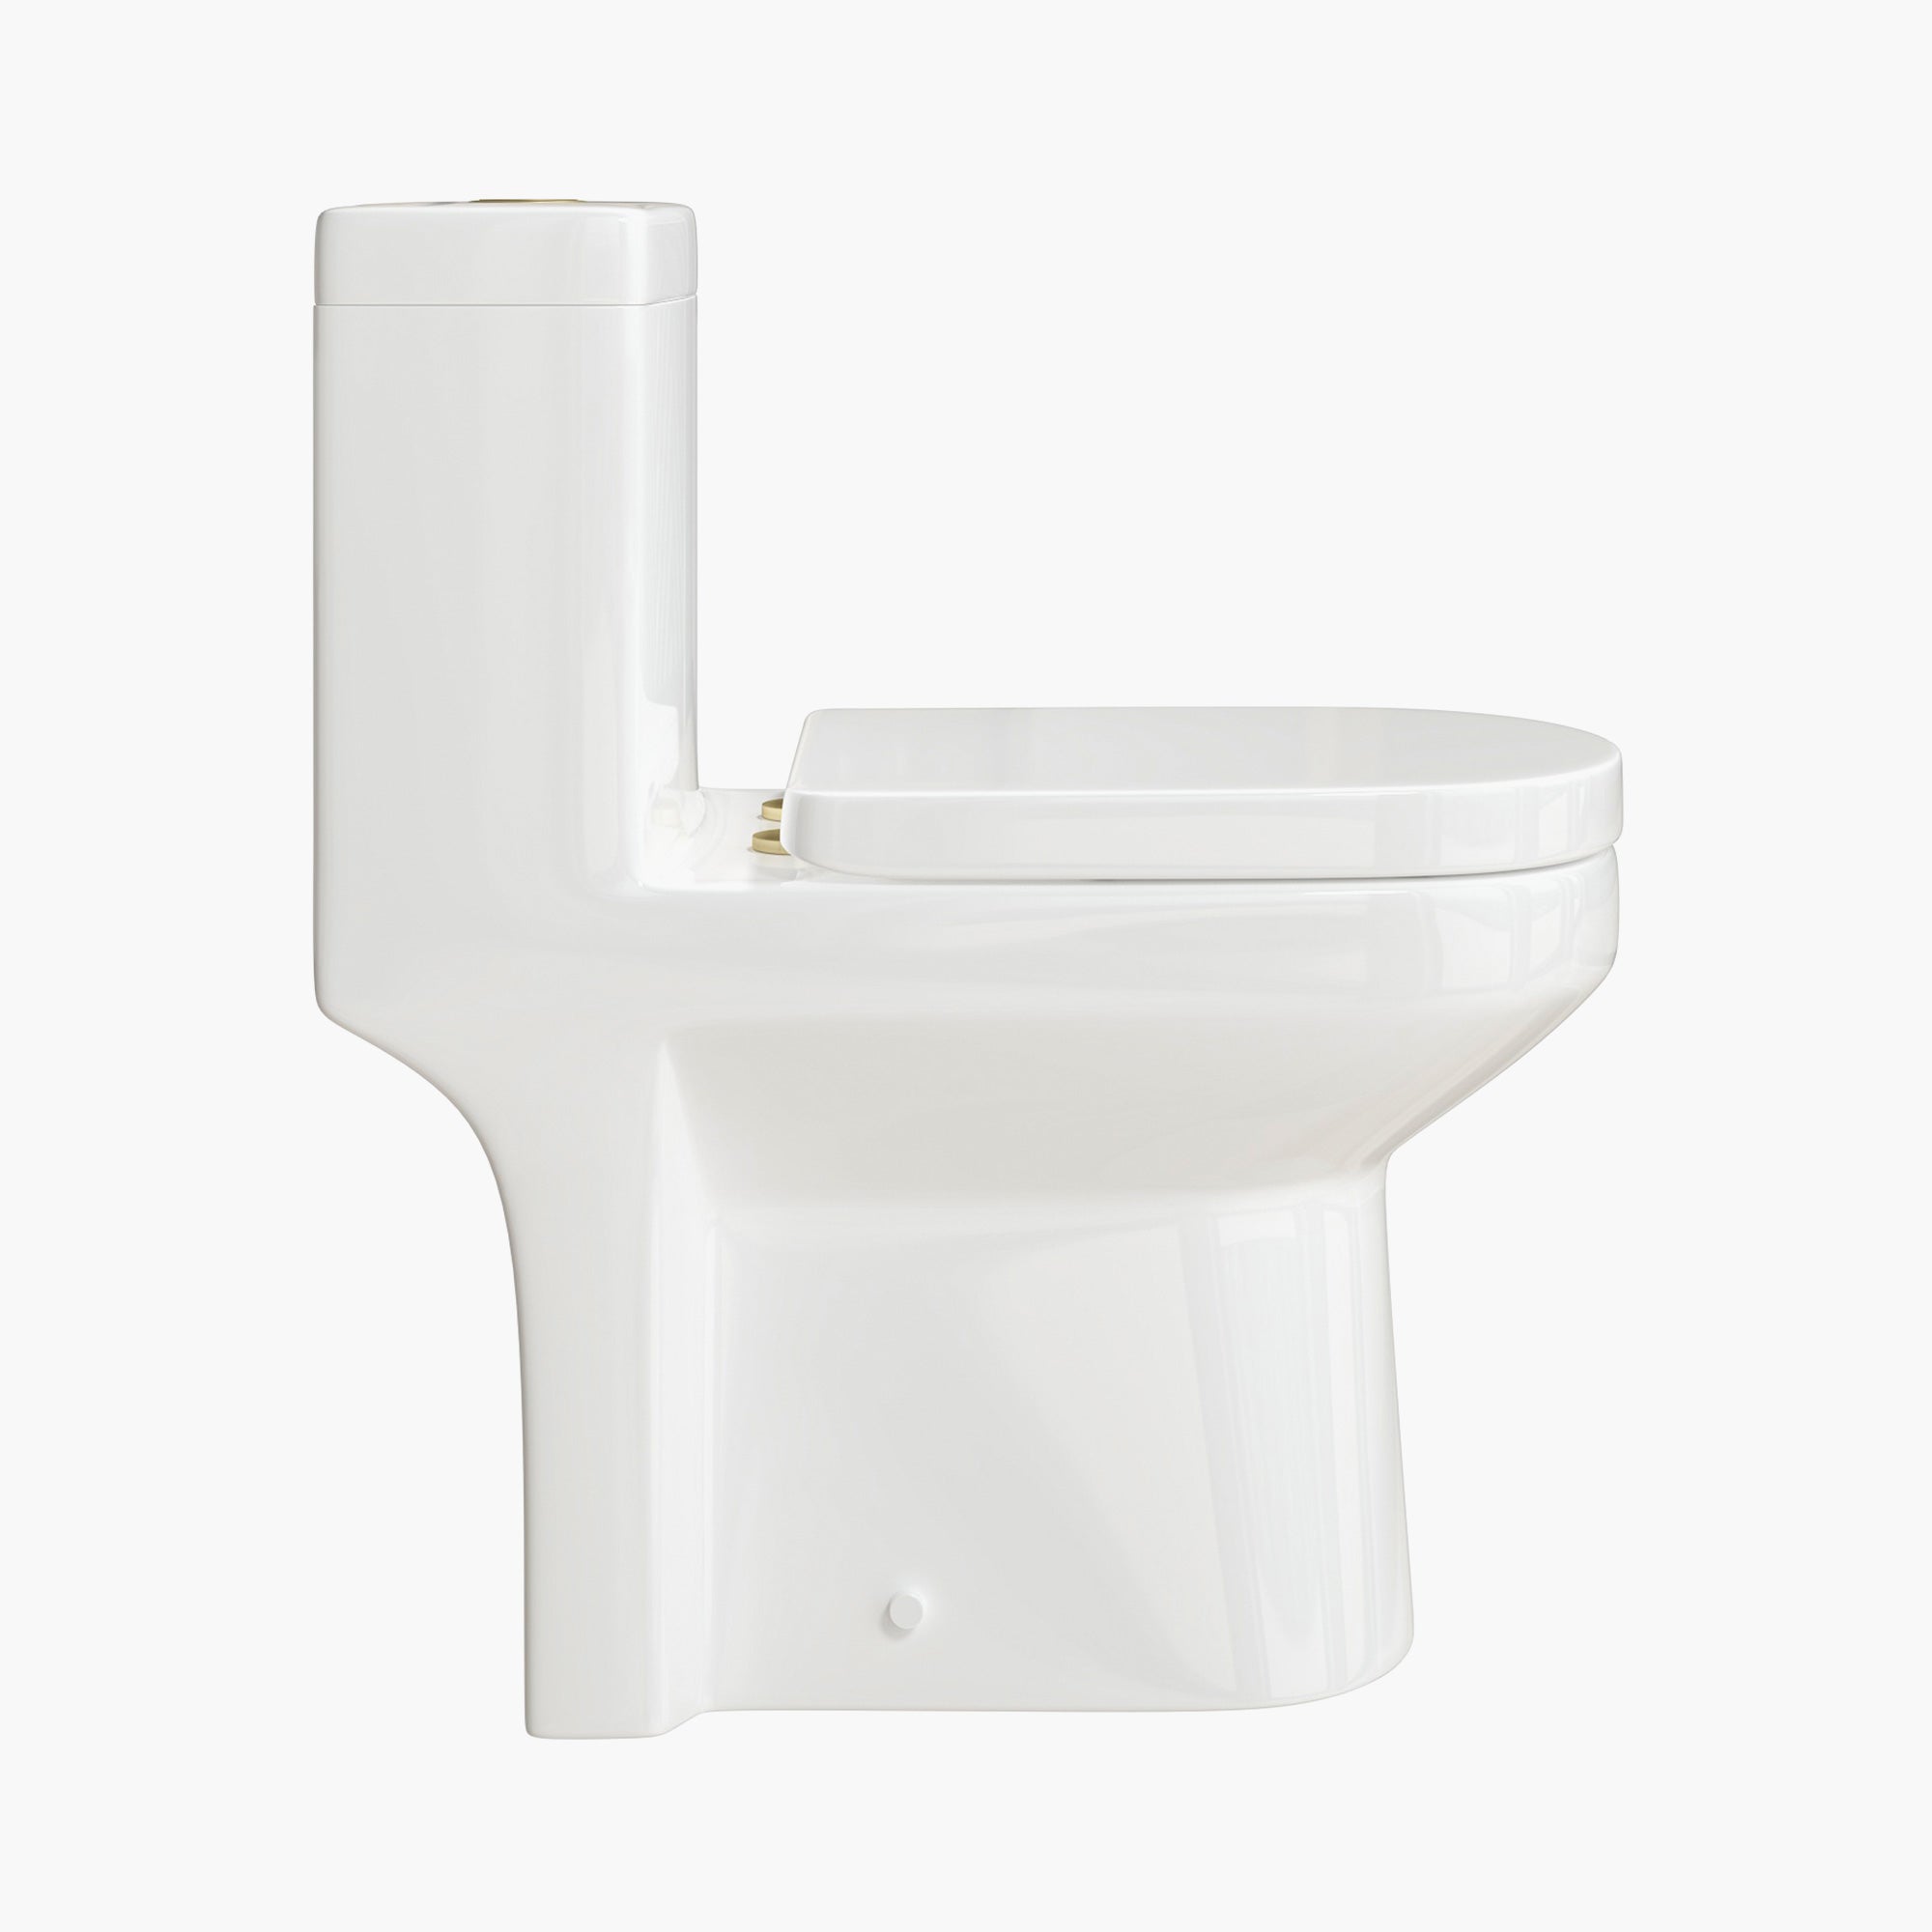 HOROW 12 Inch Toilet Bowl One Piece Floor Mounted Toilet Model 8733S-G